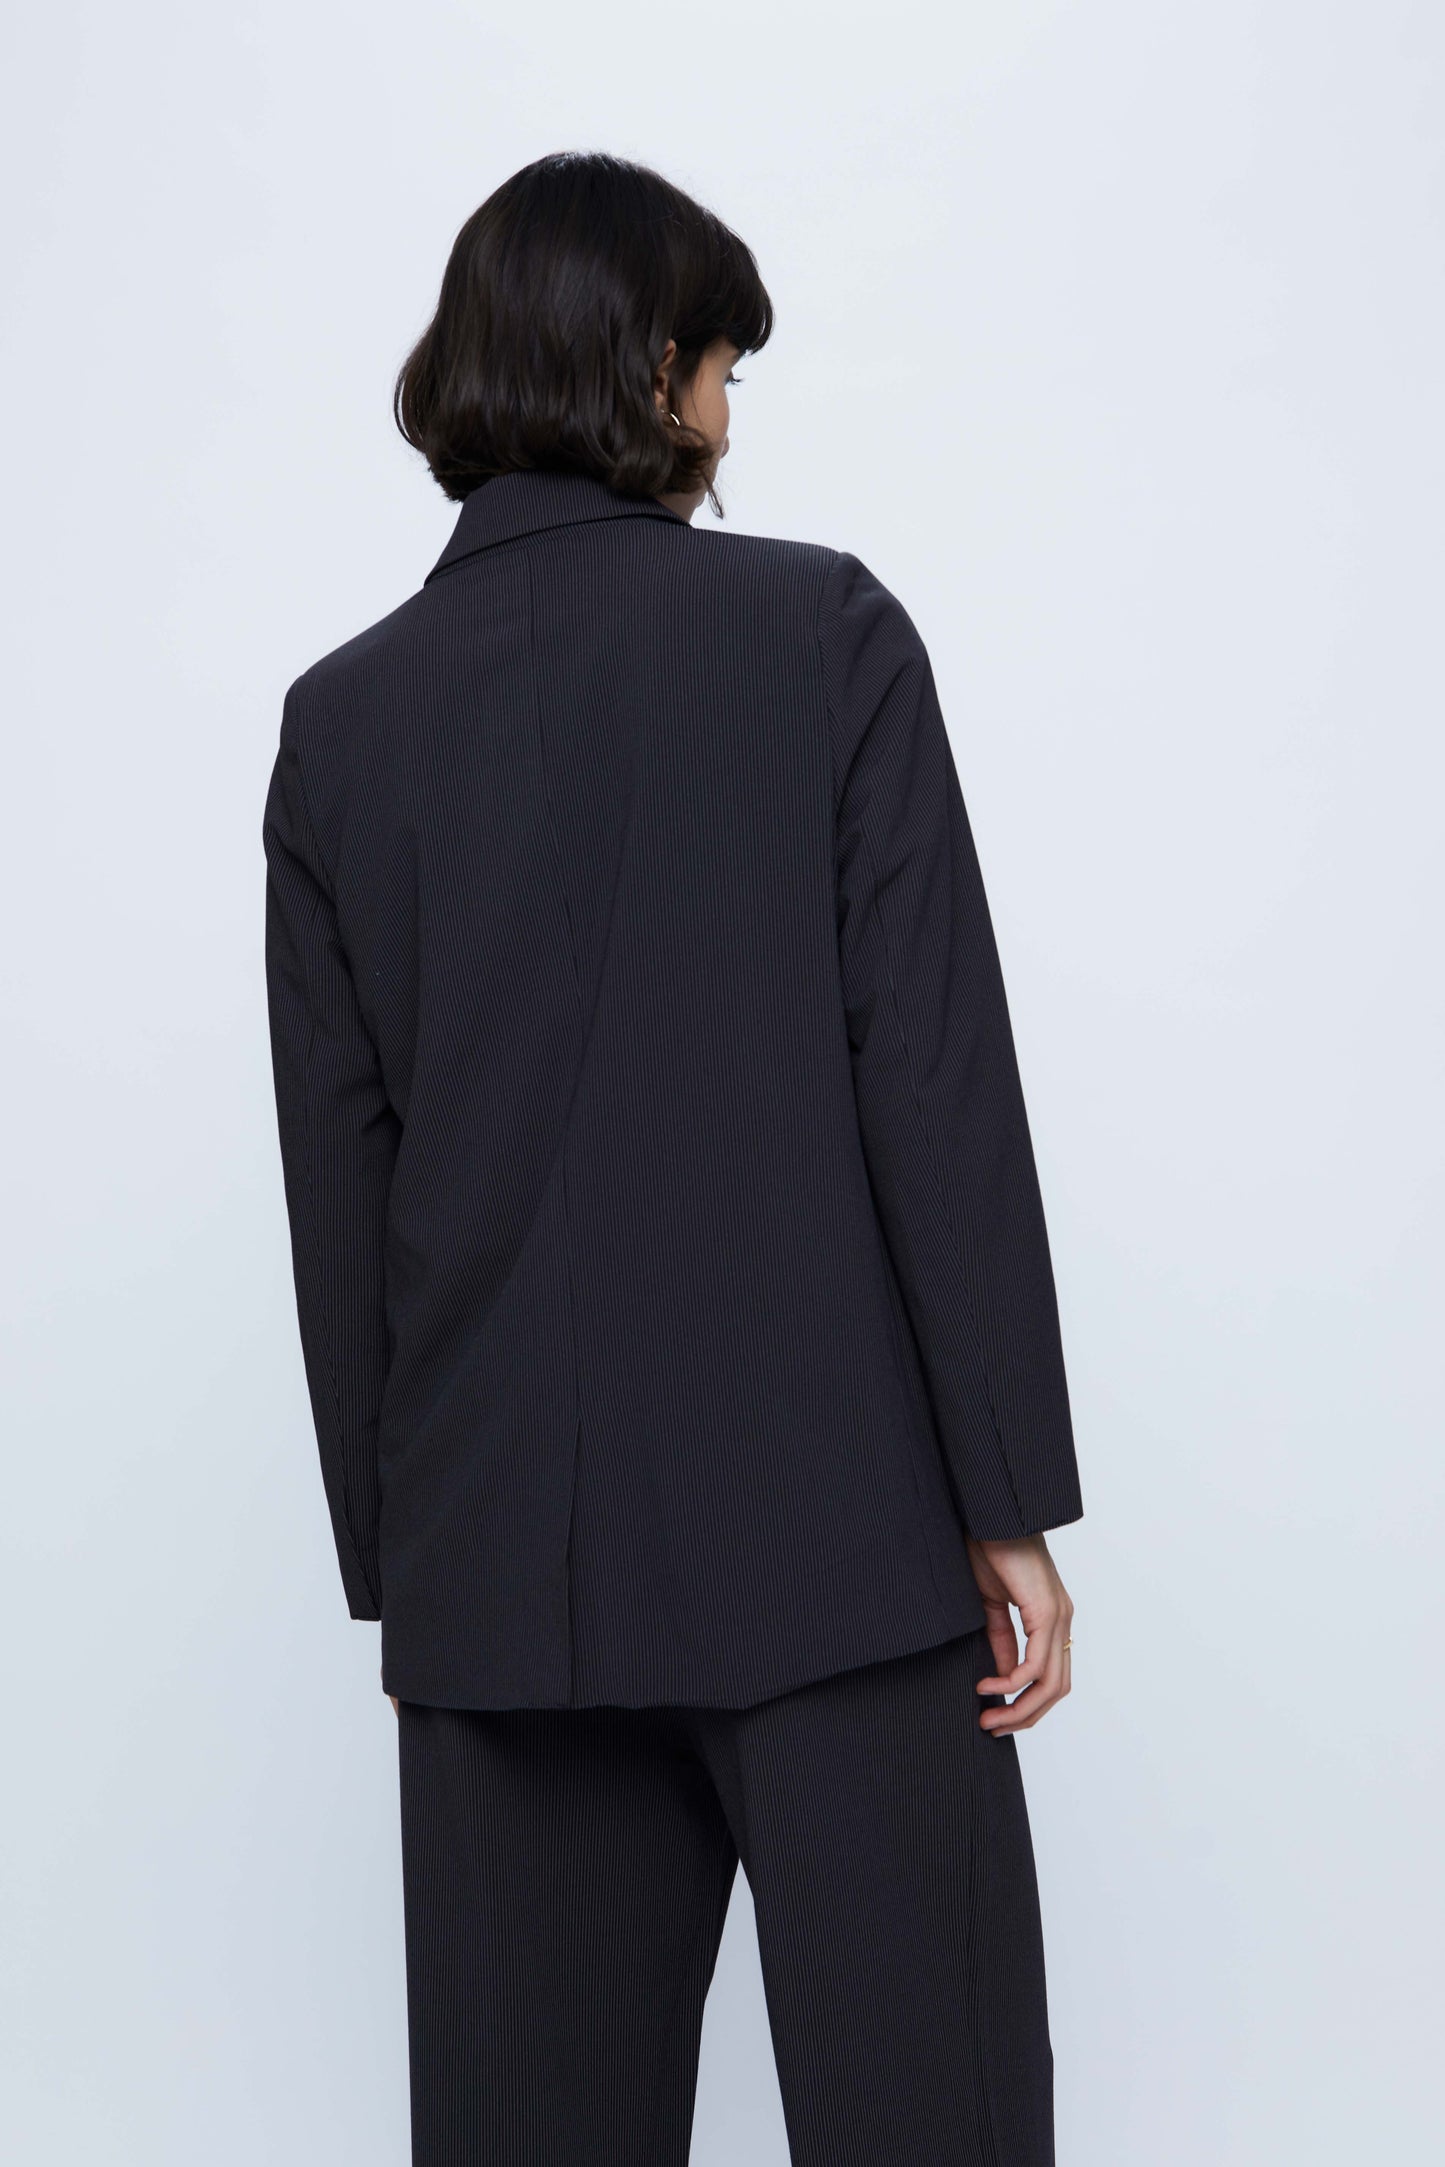 Black Pinstripe Suit Blazer